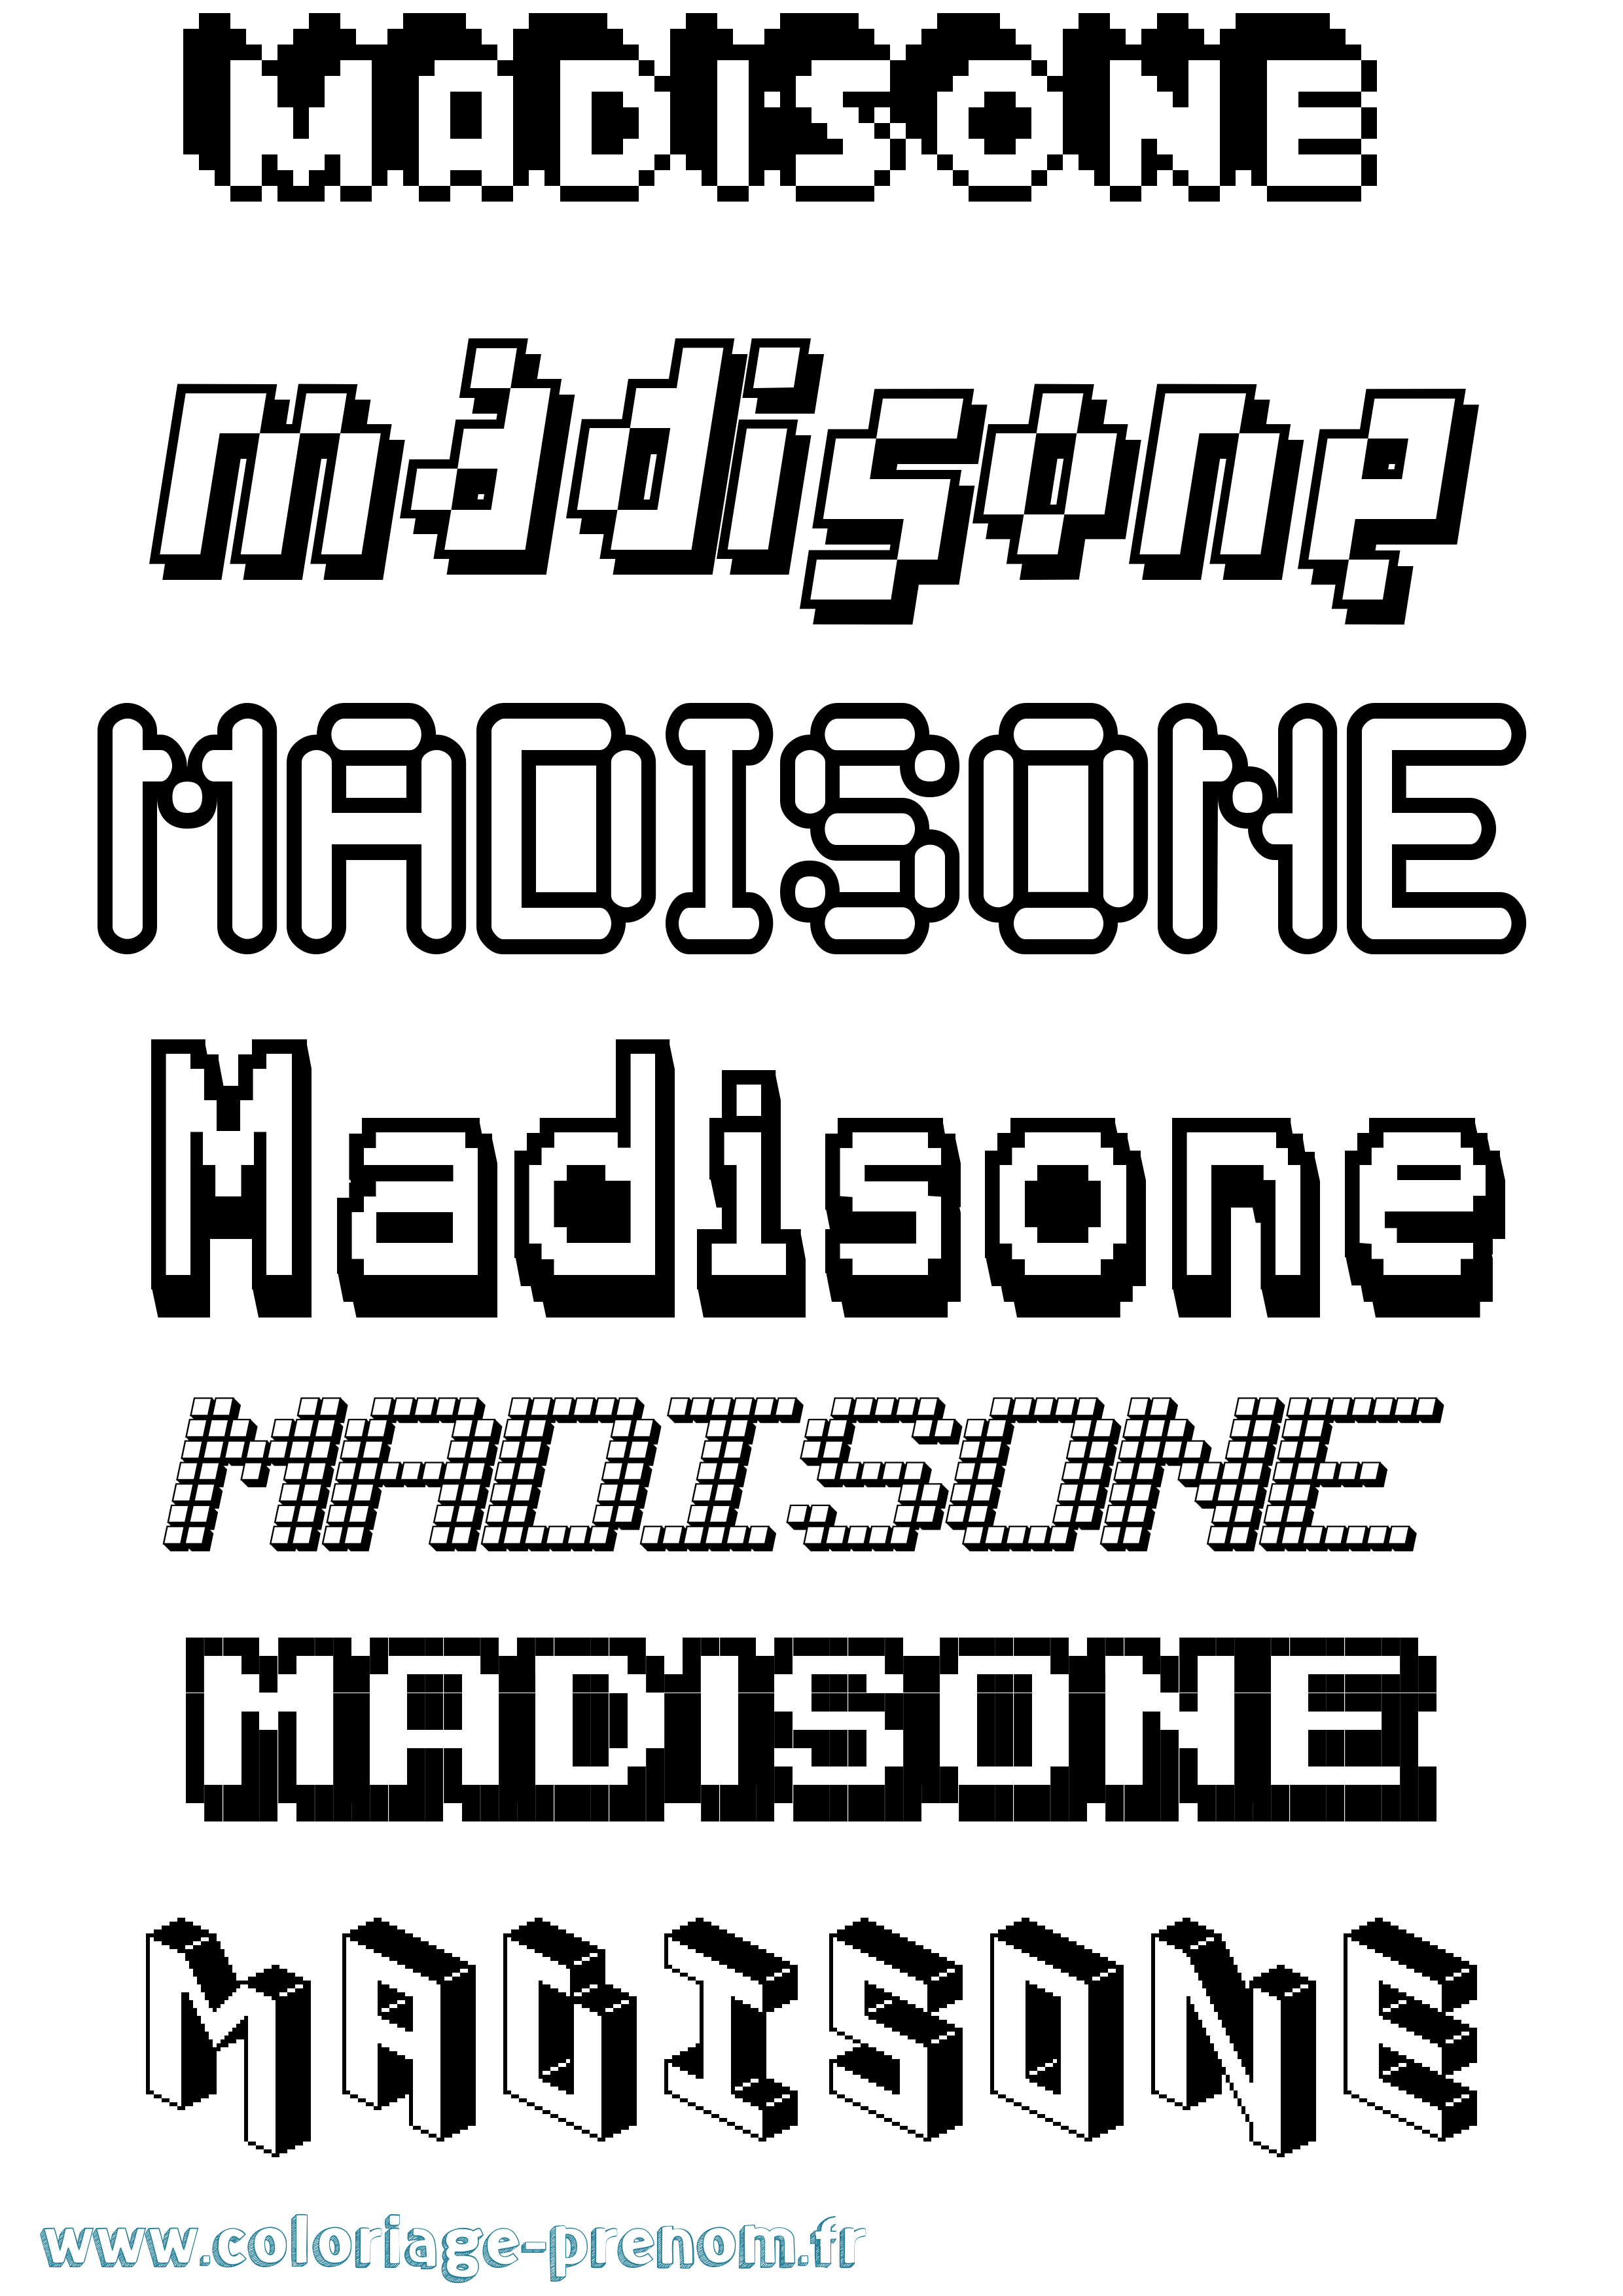 Coloriage prénom Madisone Pixel